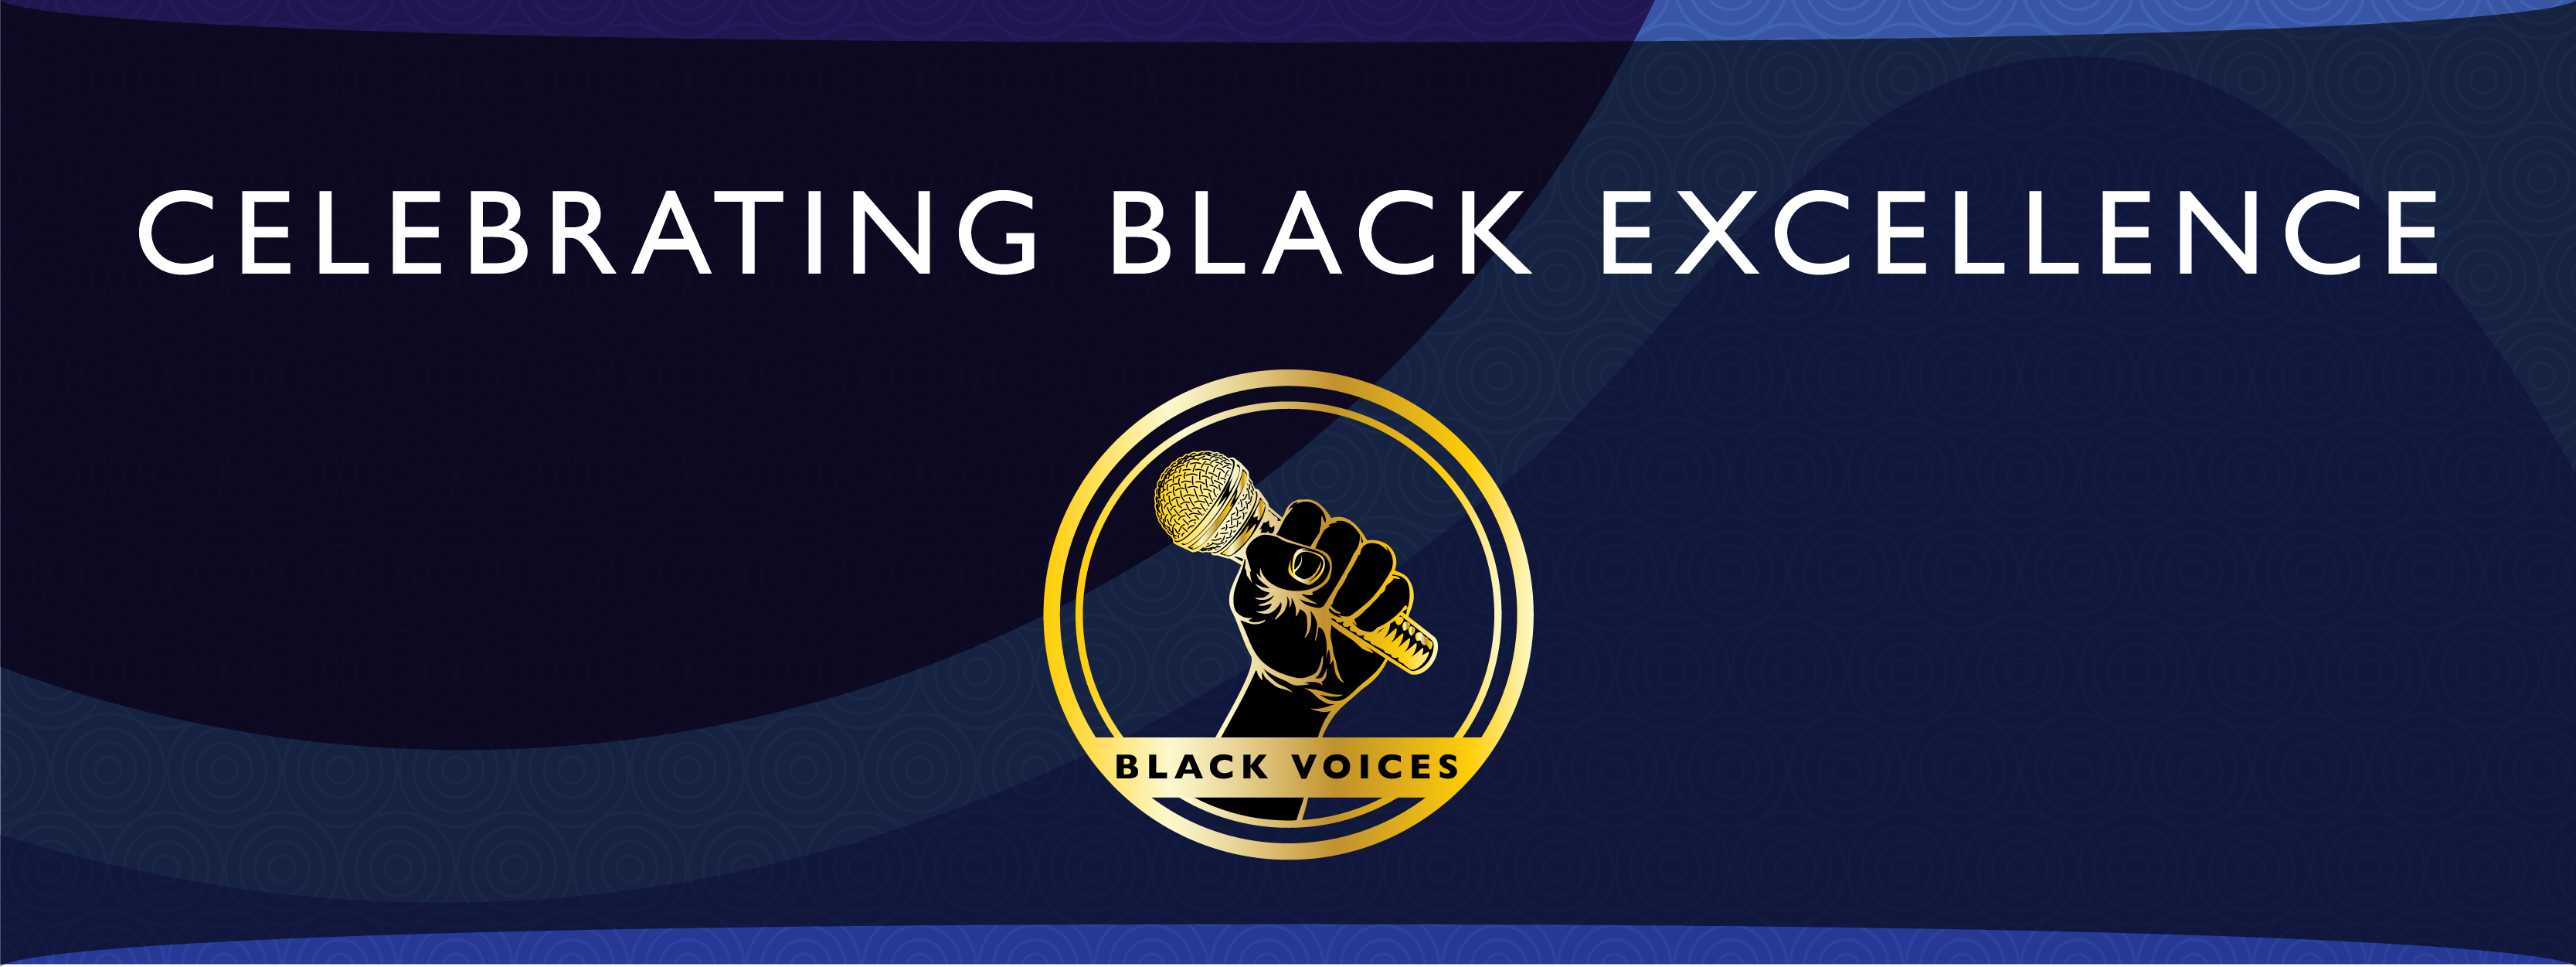 Celebrating Black Excellence - Black Voices 